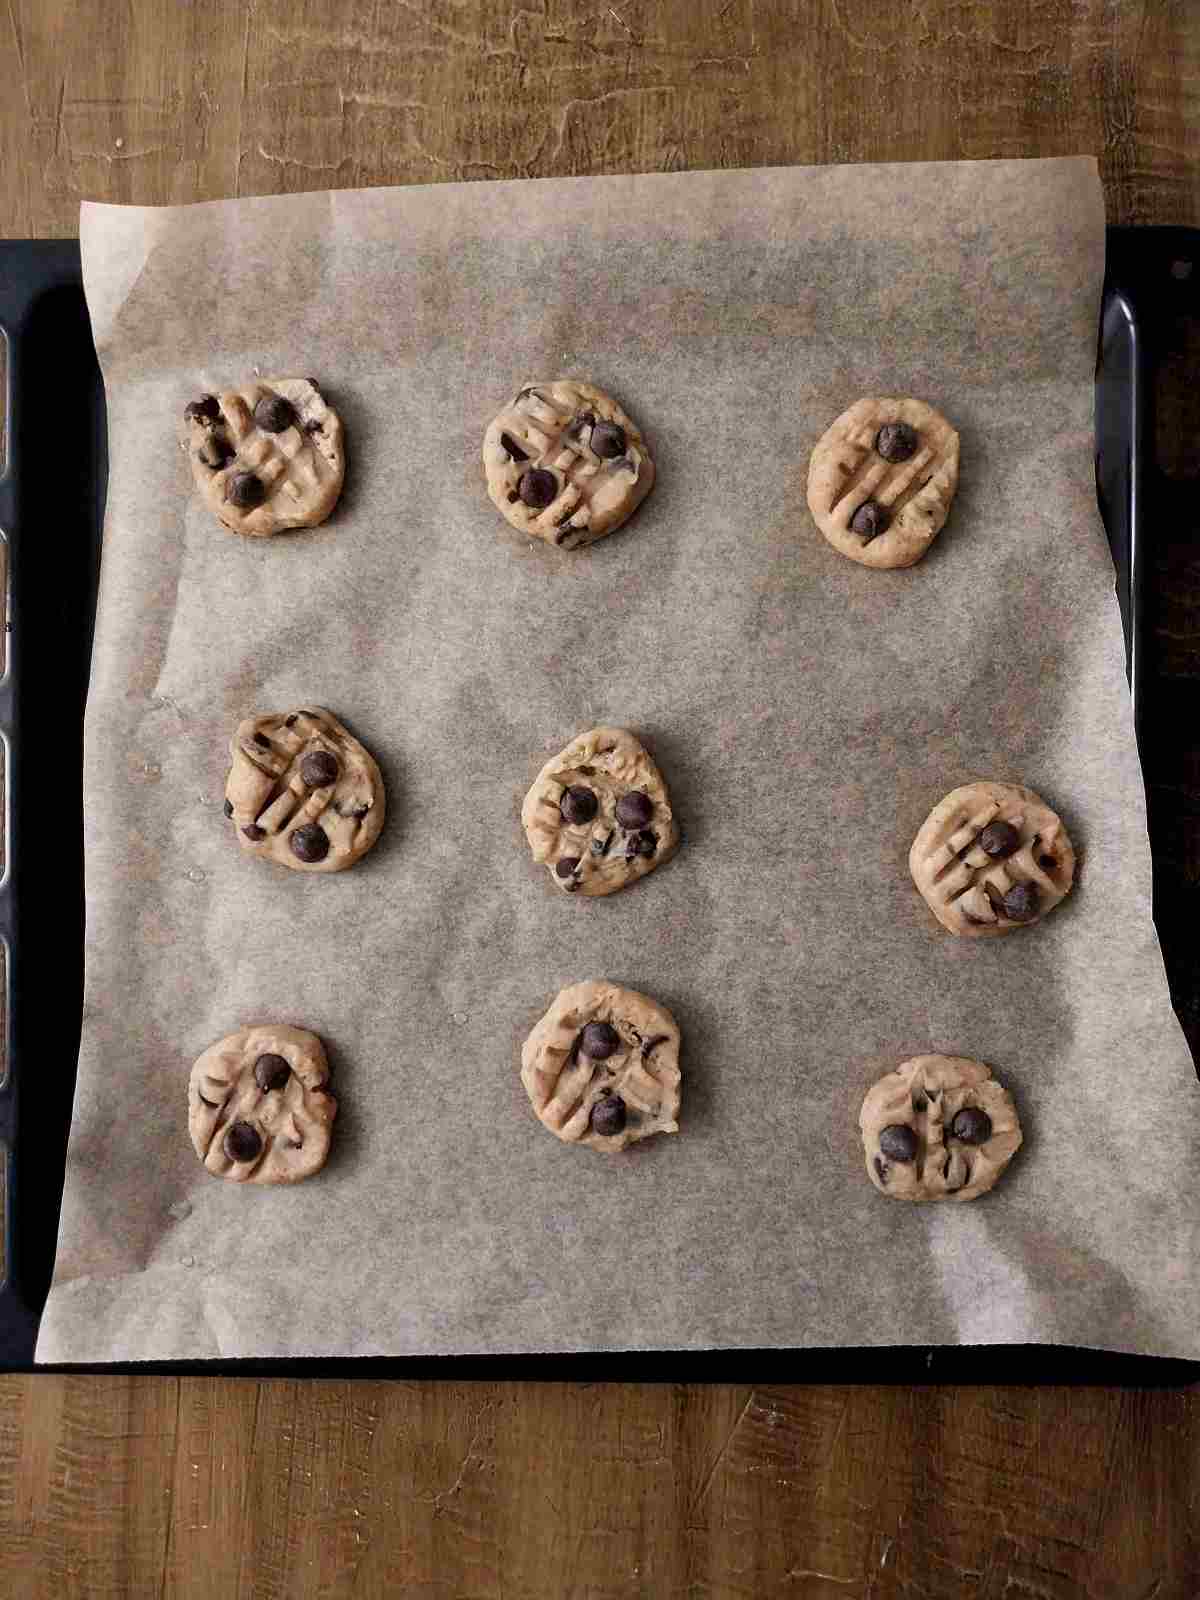 Cookies prepared to be baked.